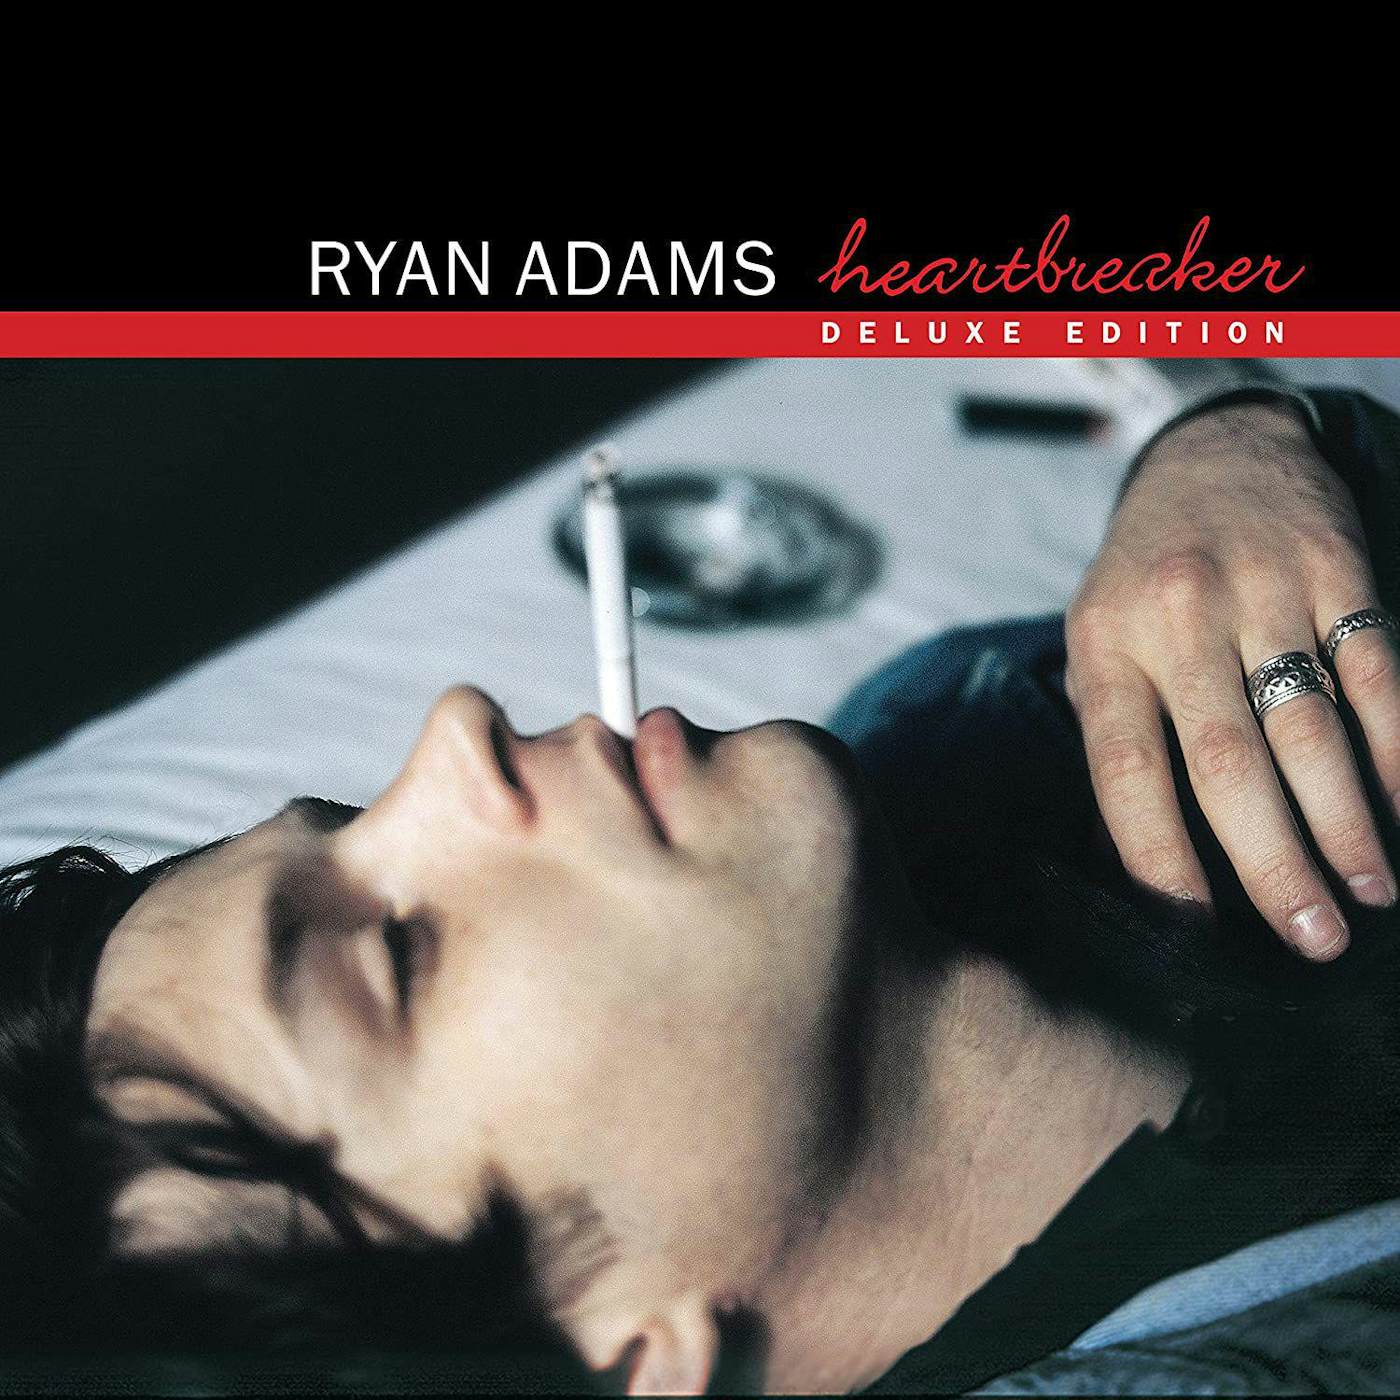 Ryan Adams HEARTBREAKER (4LP/DVD/DELUXE EDITION) Vinyl Record